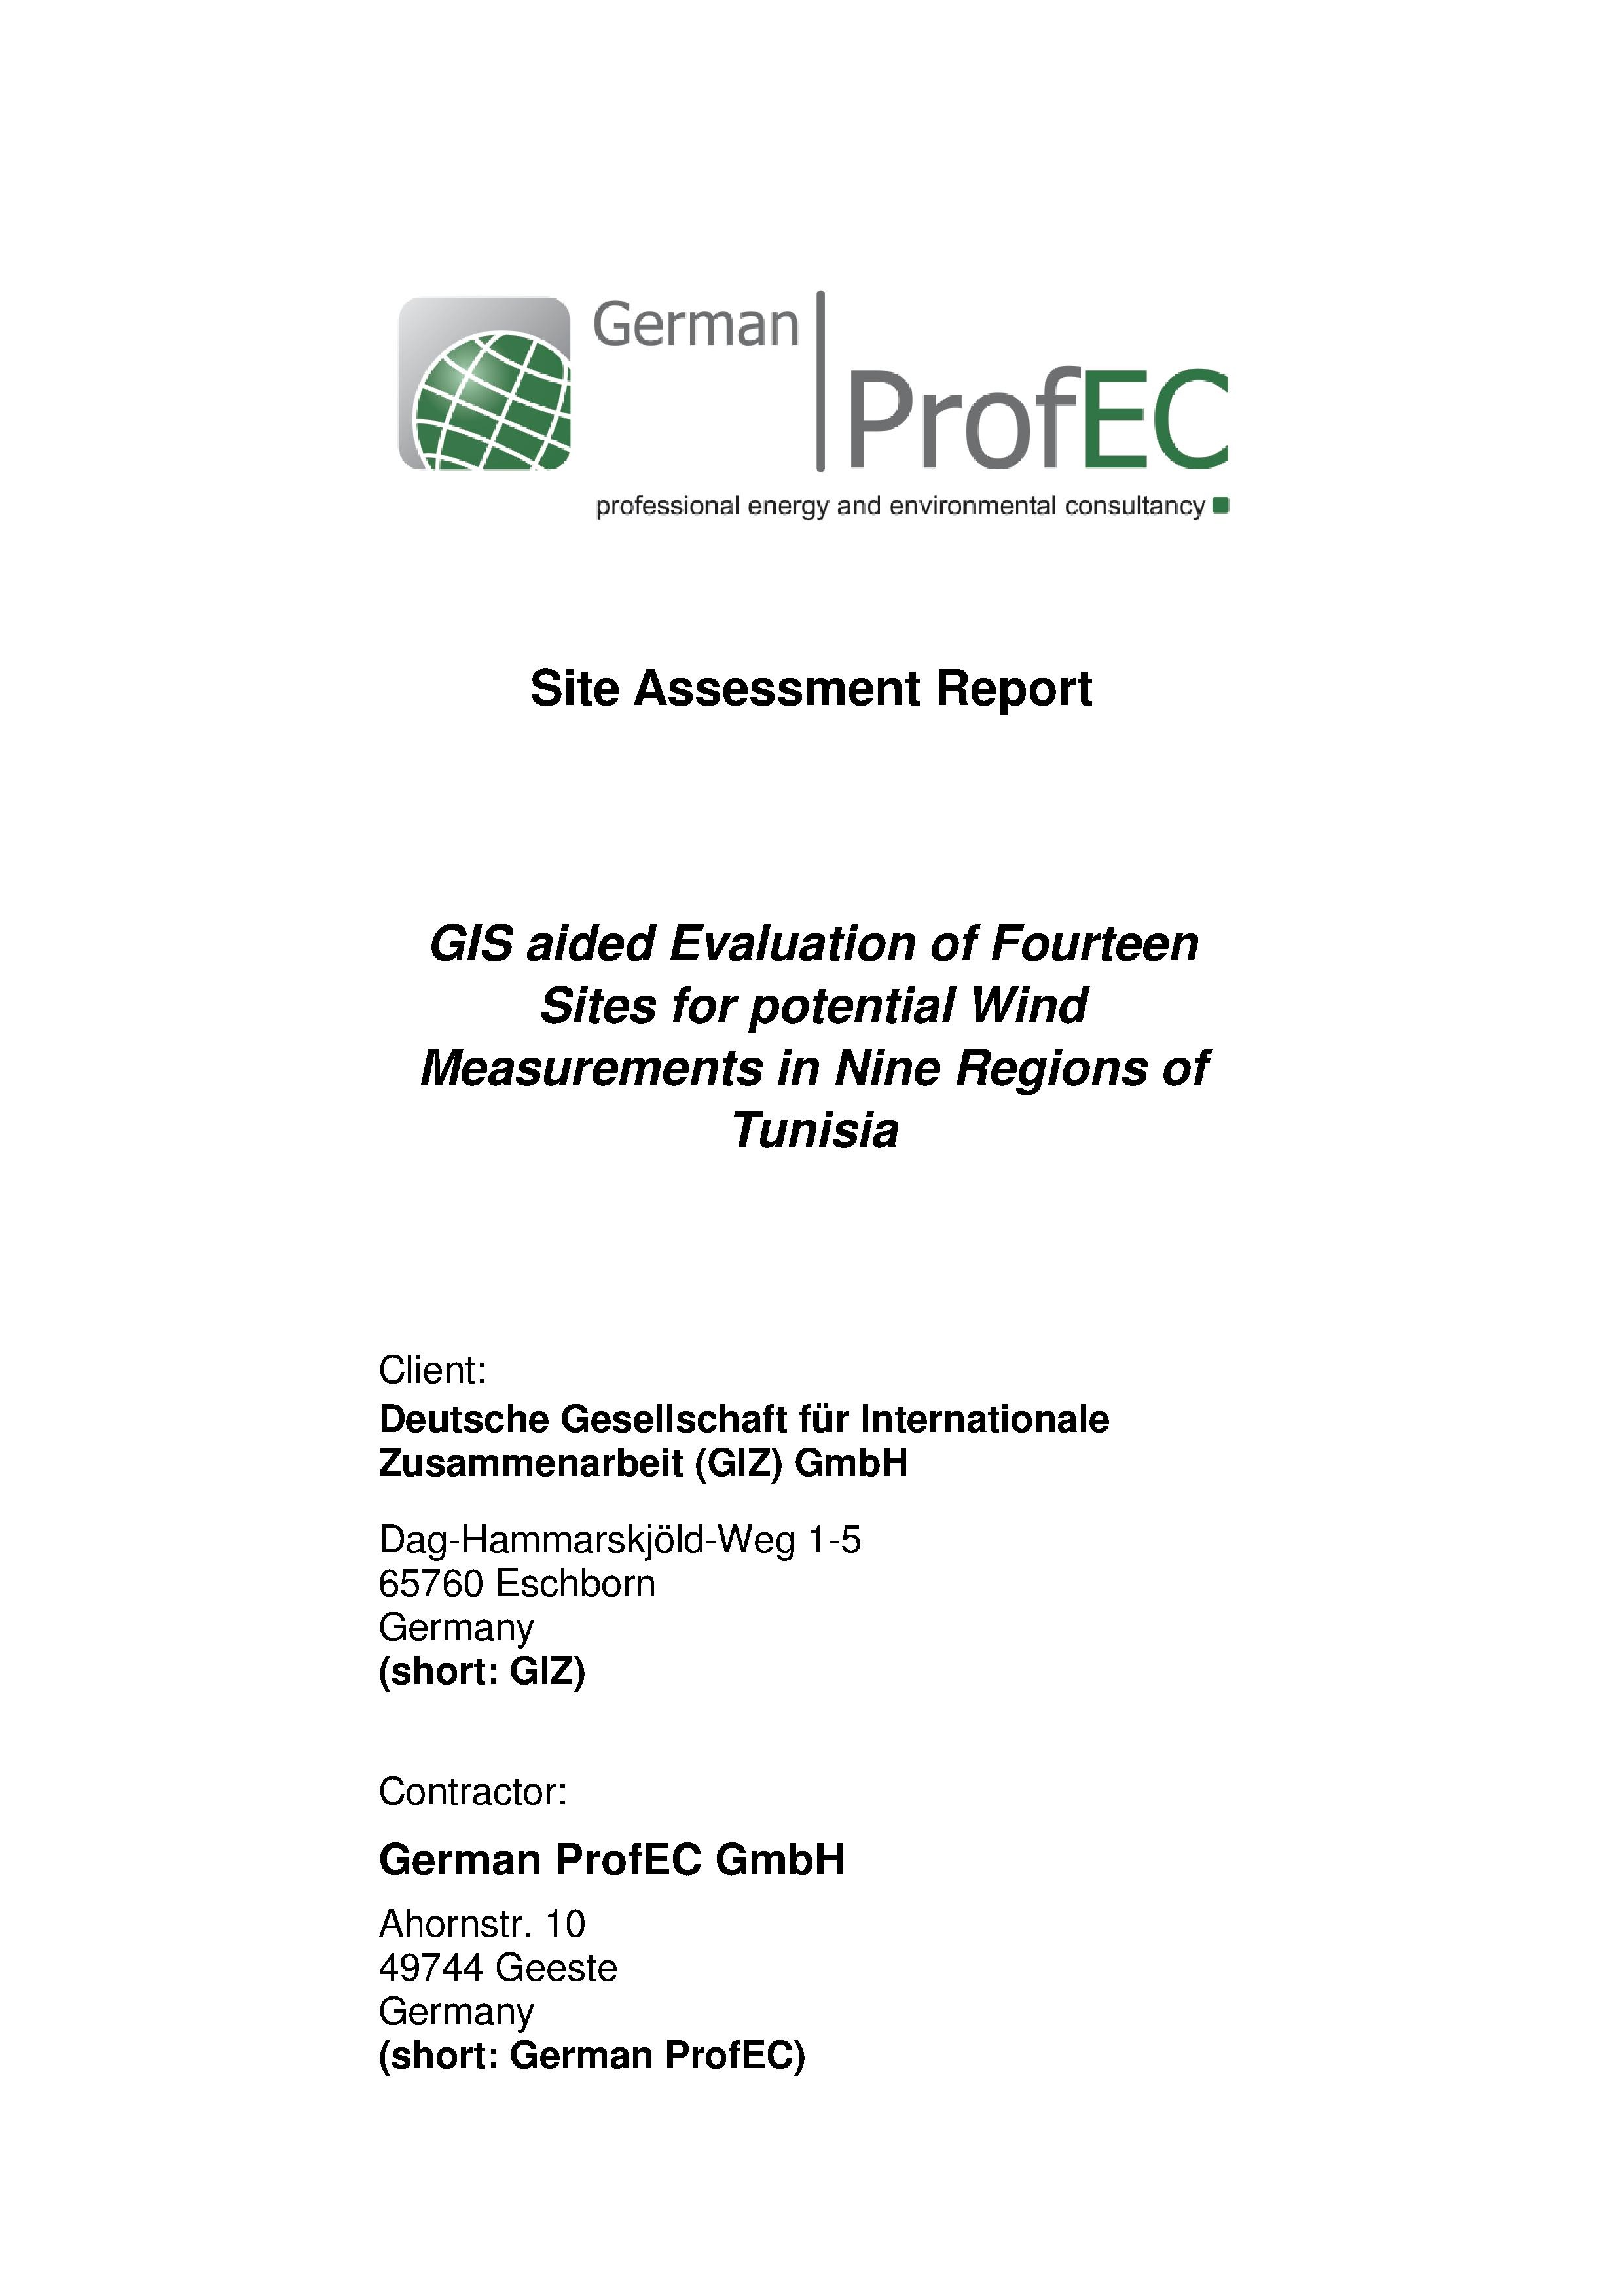 Wind site assessment Tunisia, German ProfEC/GIZ, 2011